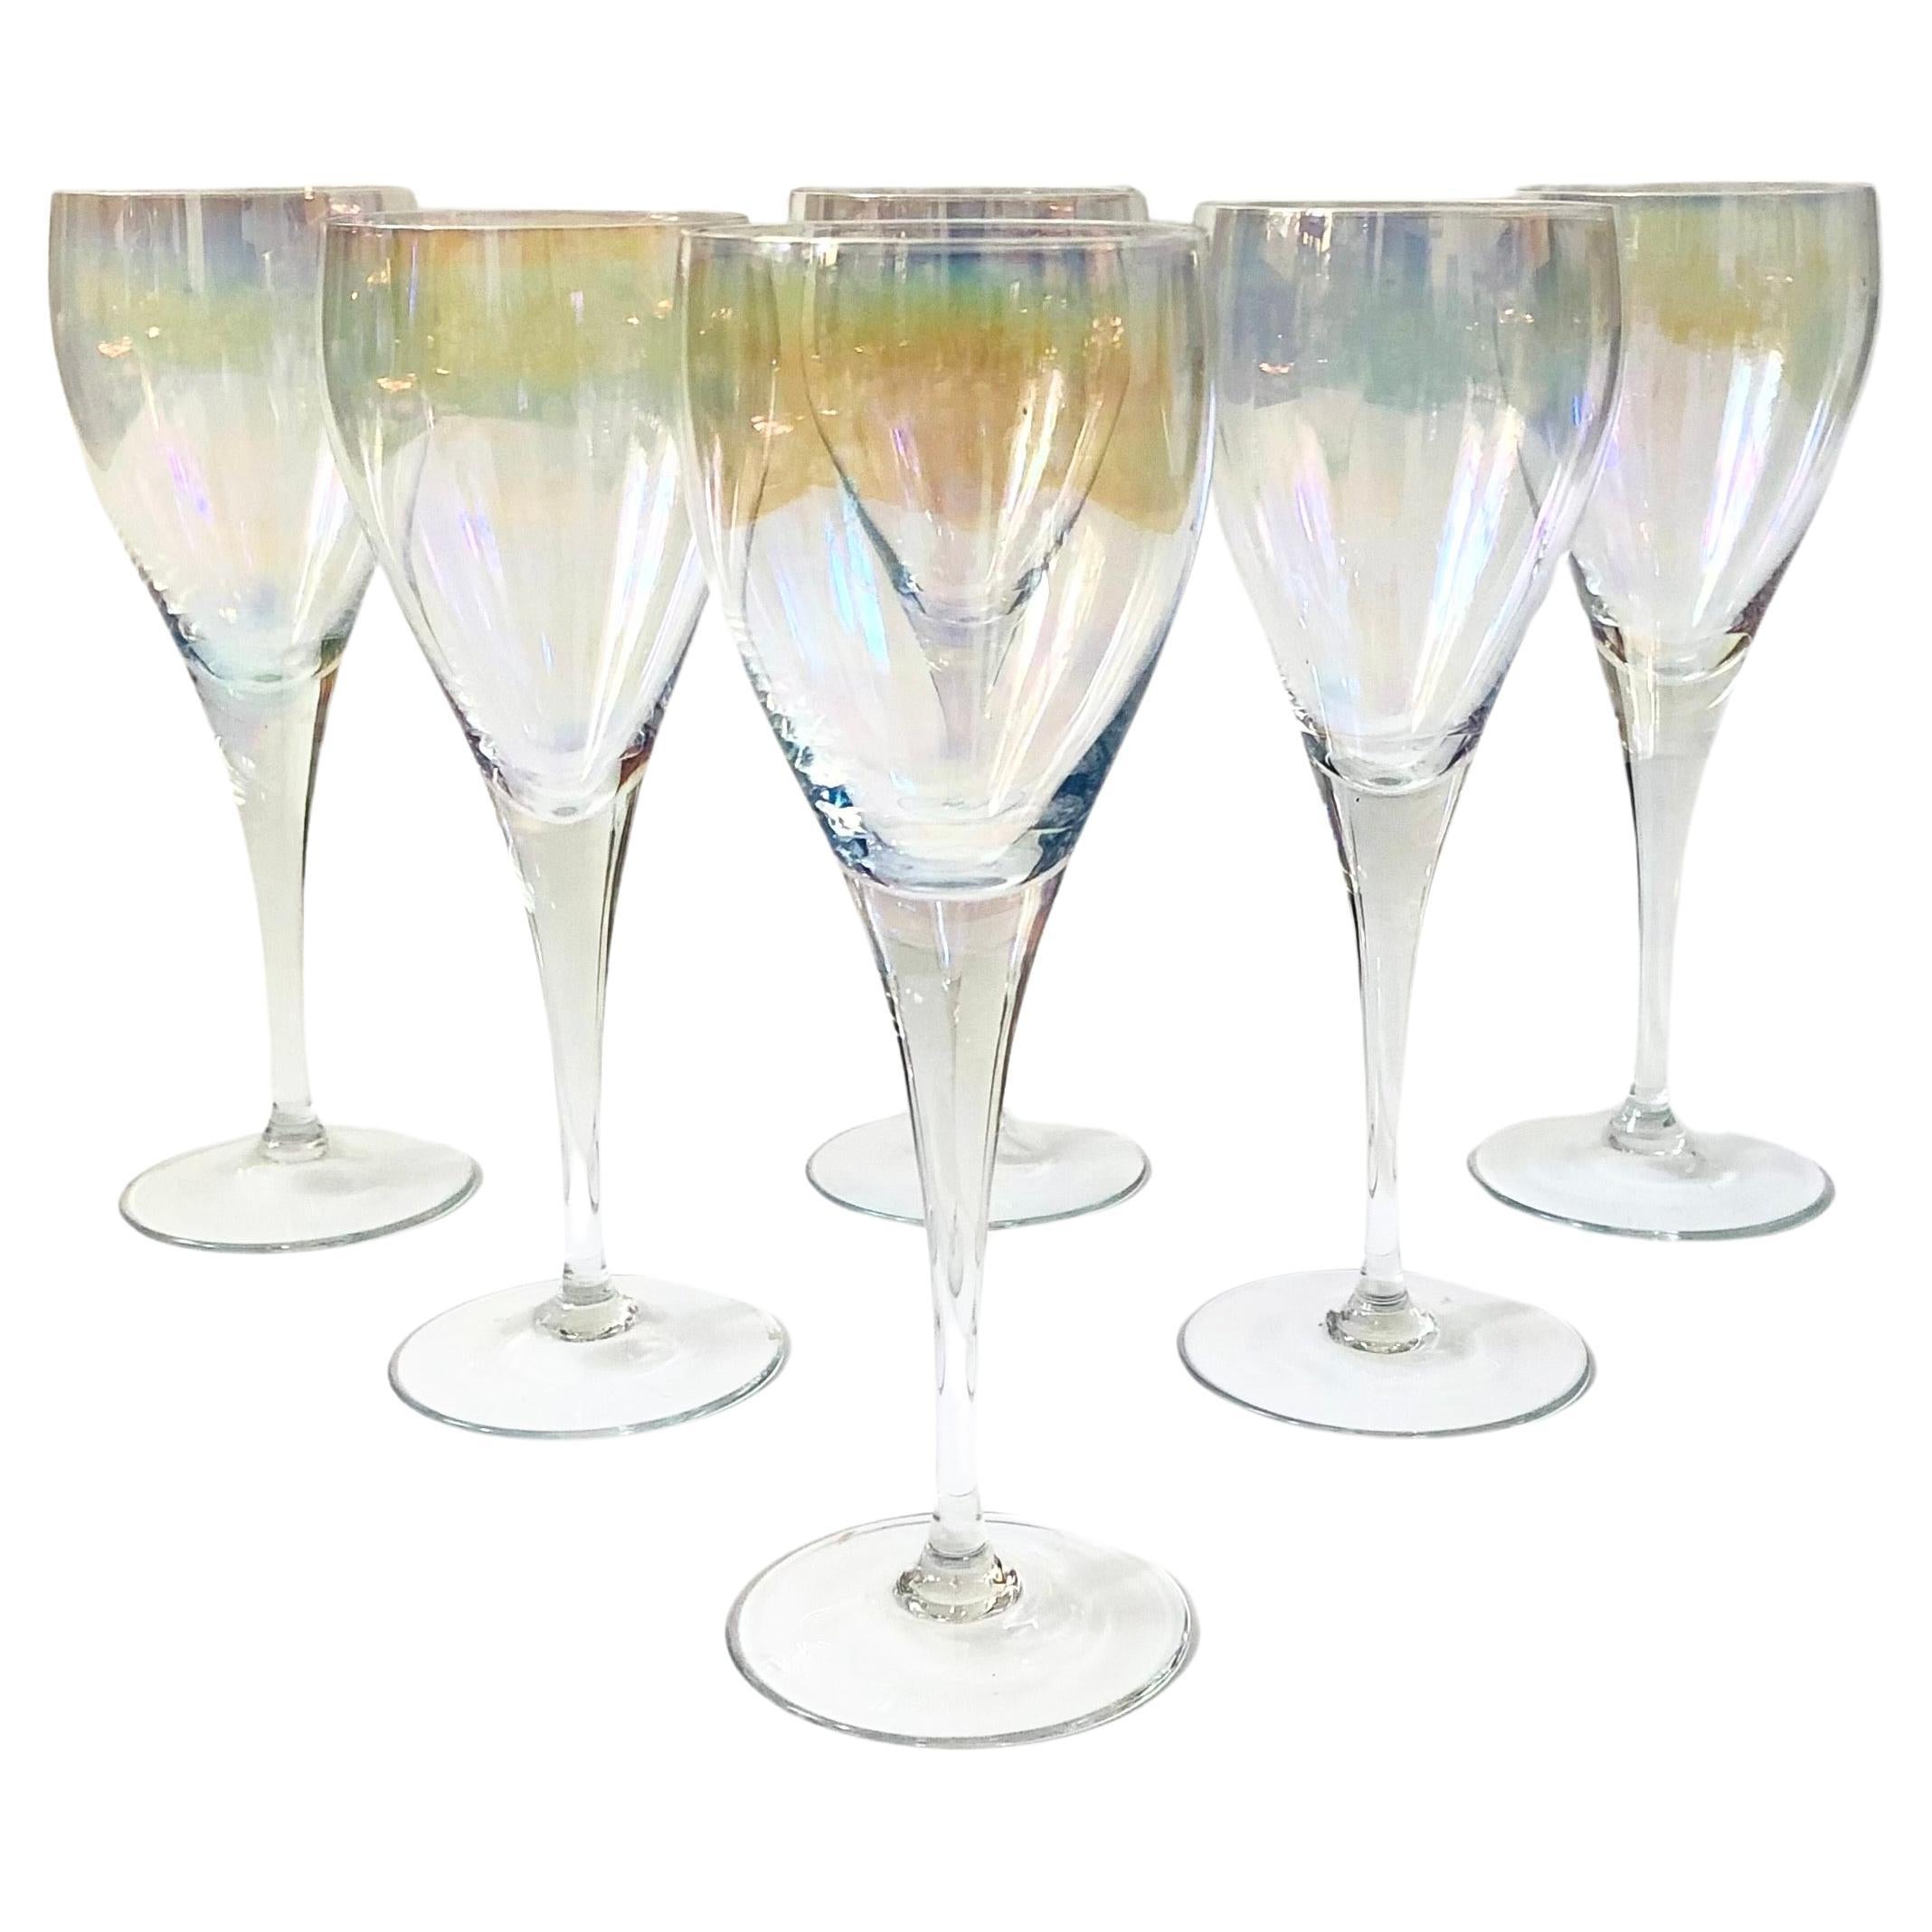 Iridescent Wine Glasses - Set of 6